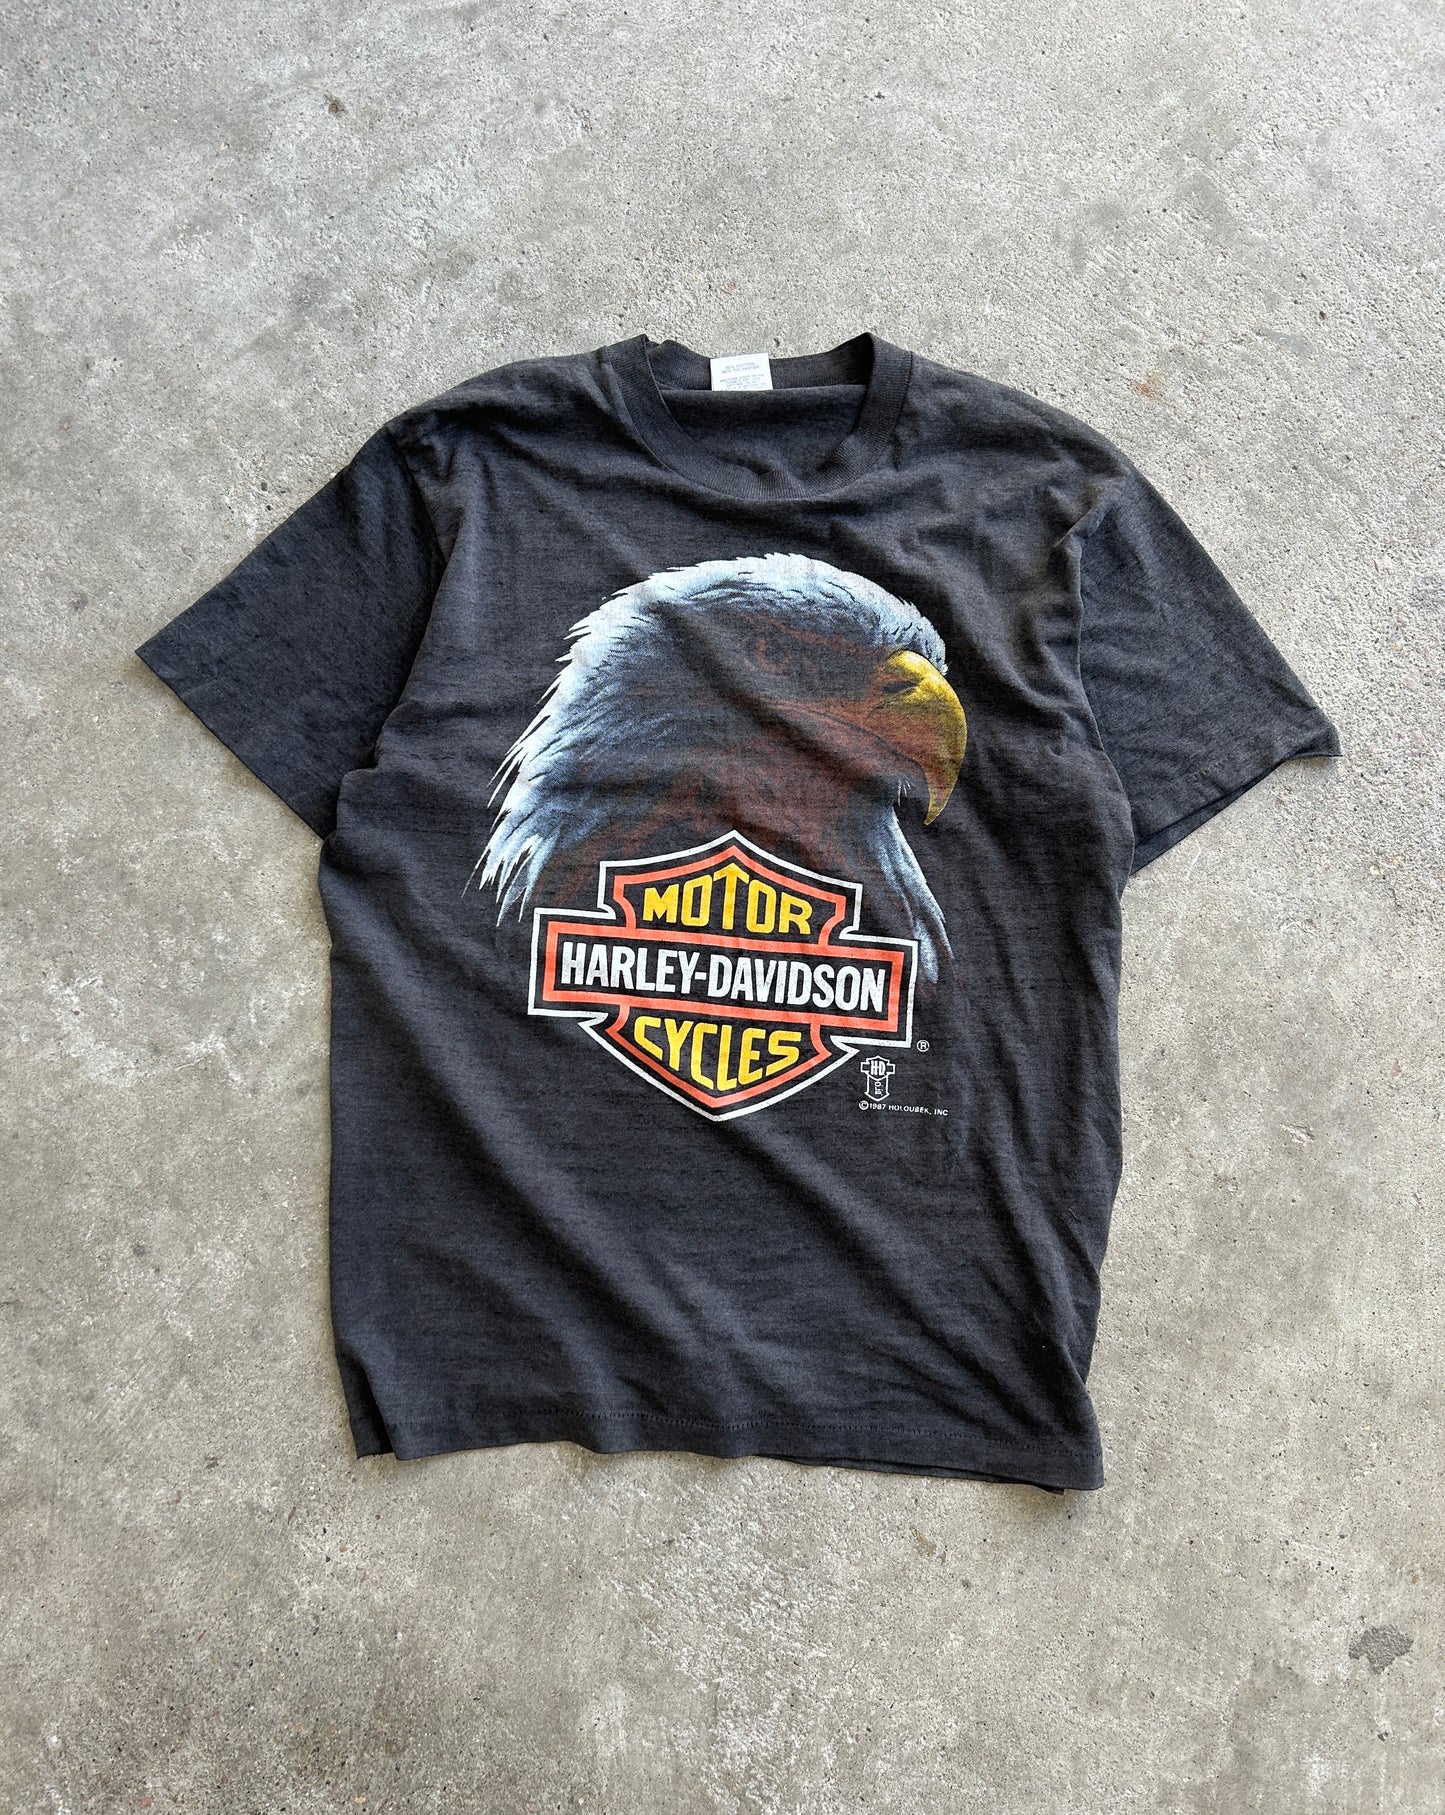 Vintage Harley Davidson Shirt - L